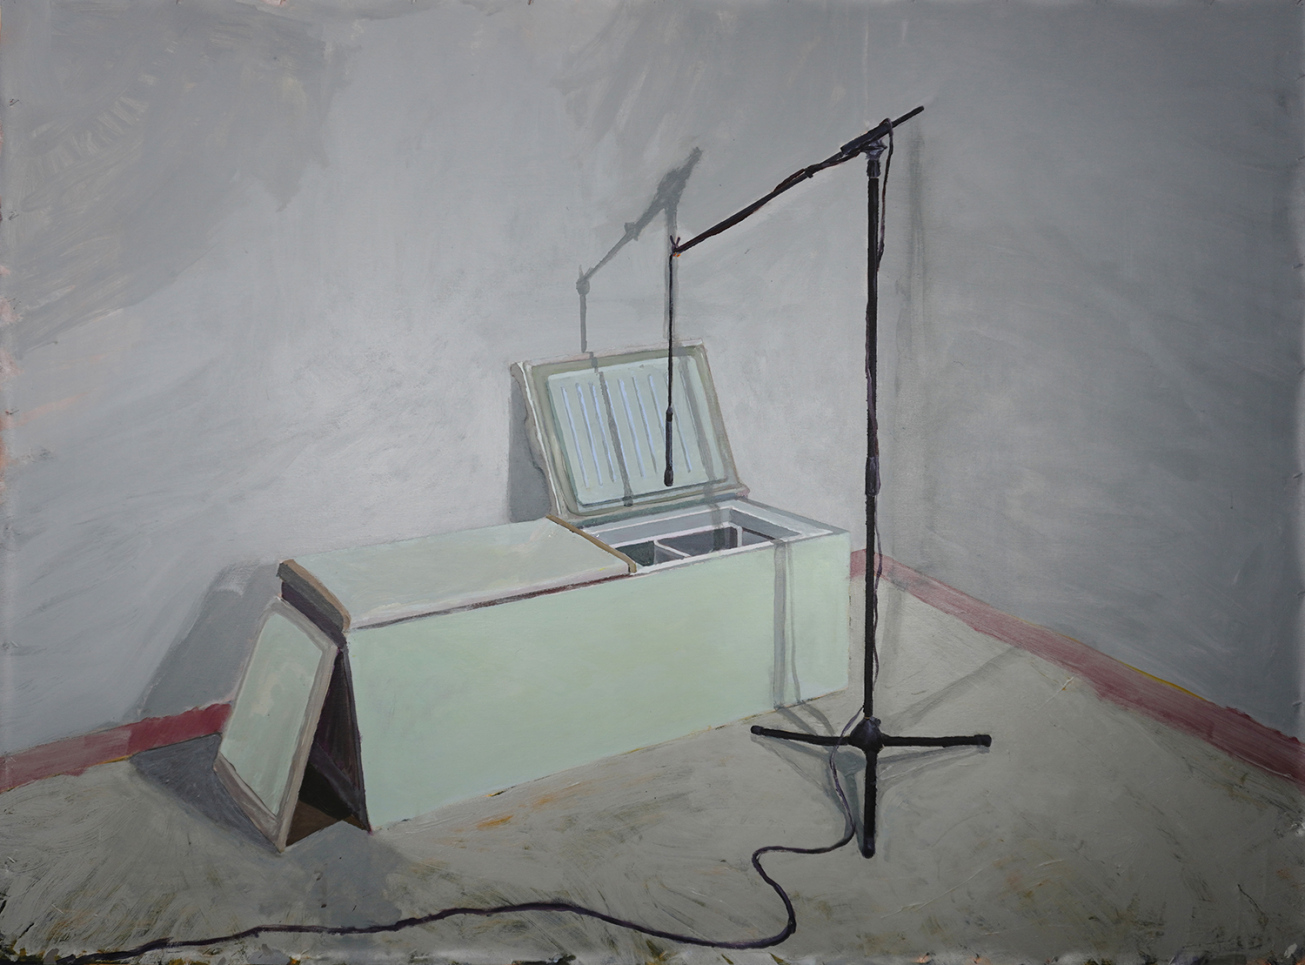 Recording empty refrigerator at rest, 2021Acrylic on canvas. 146 x 110 cm.